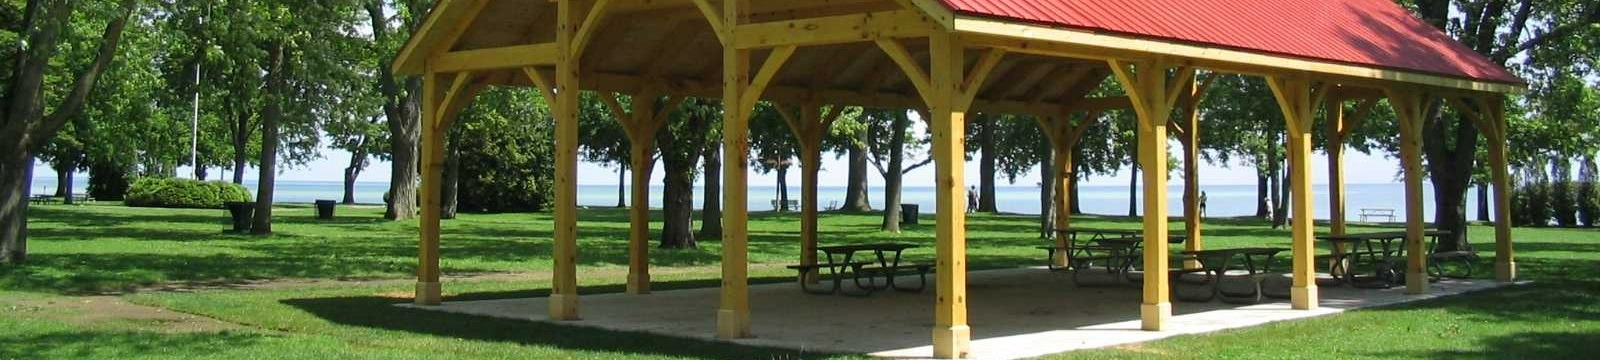 Picnic shelter at Lakeview Park